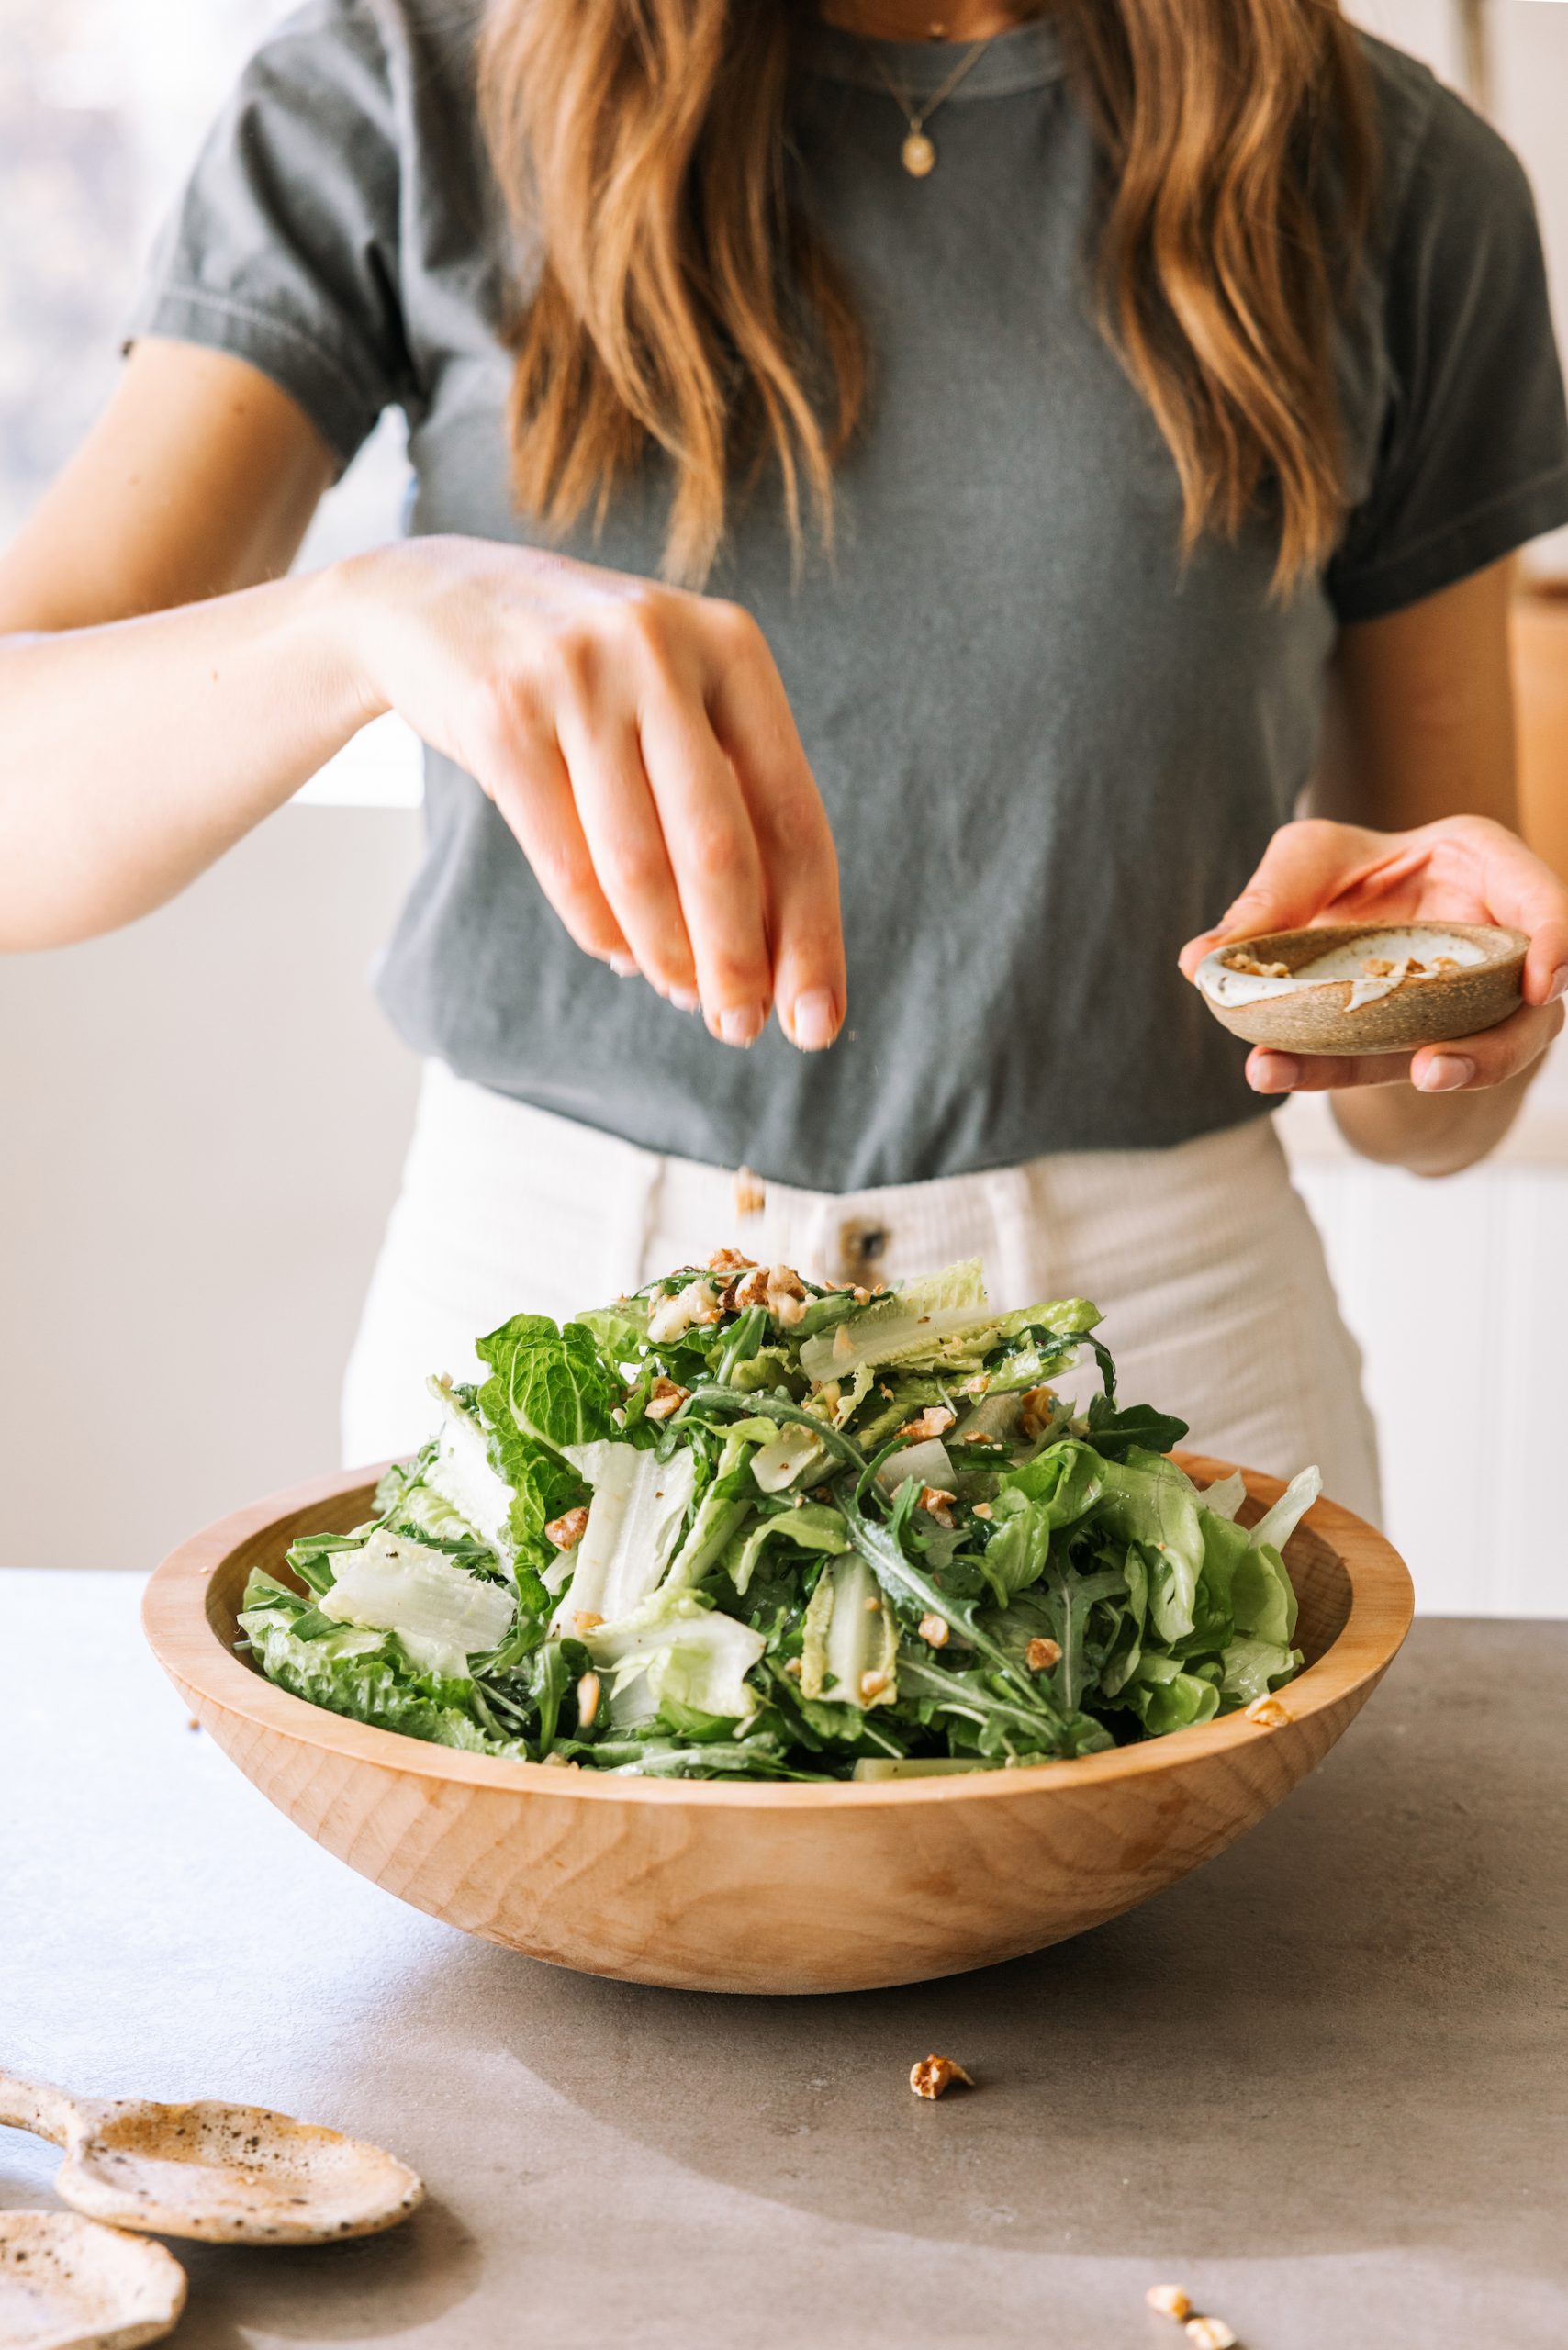 via carota's insalata verde, casa zuma 12 of the best simple green salad recipes inspired by handmade wooden salad bowls